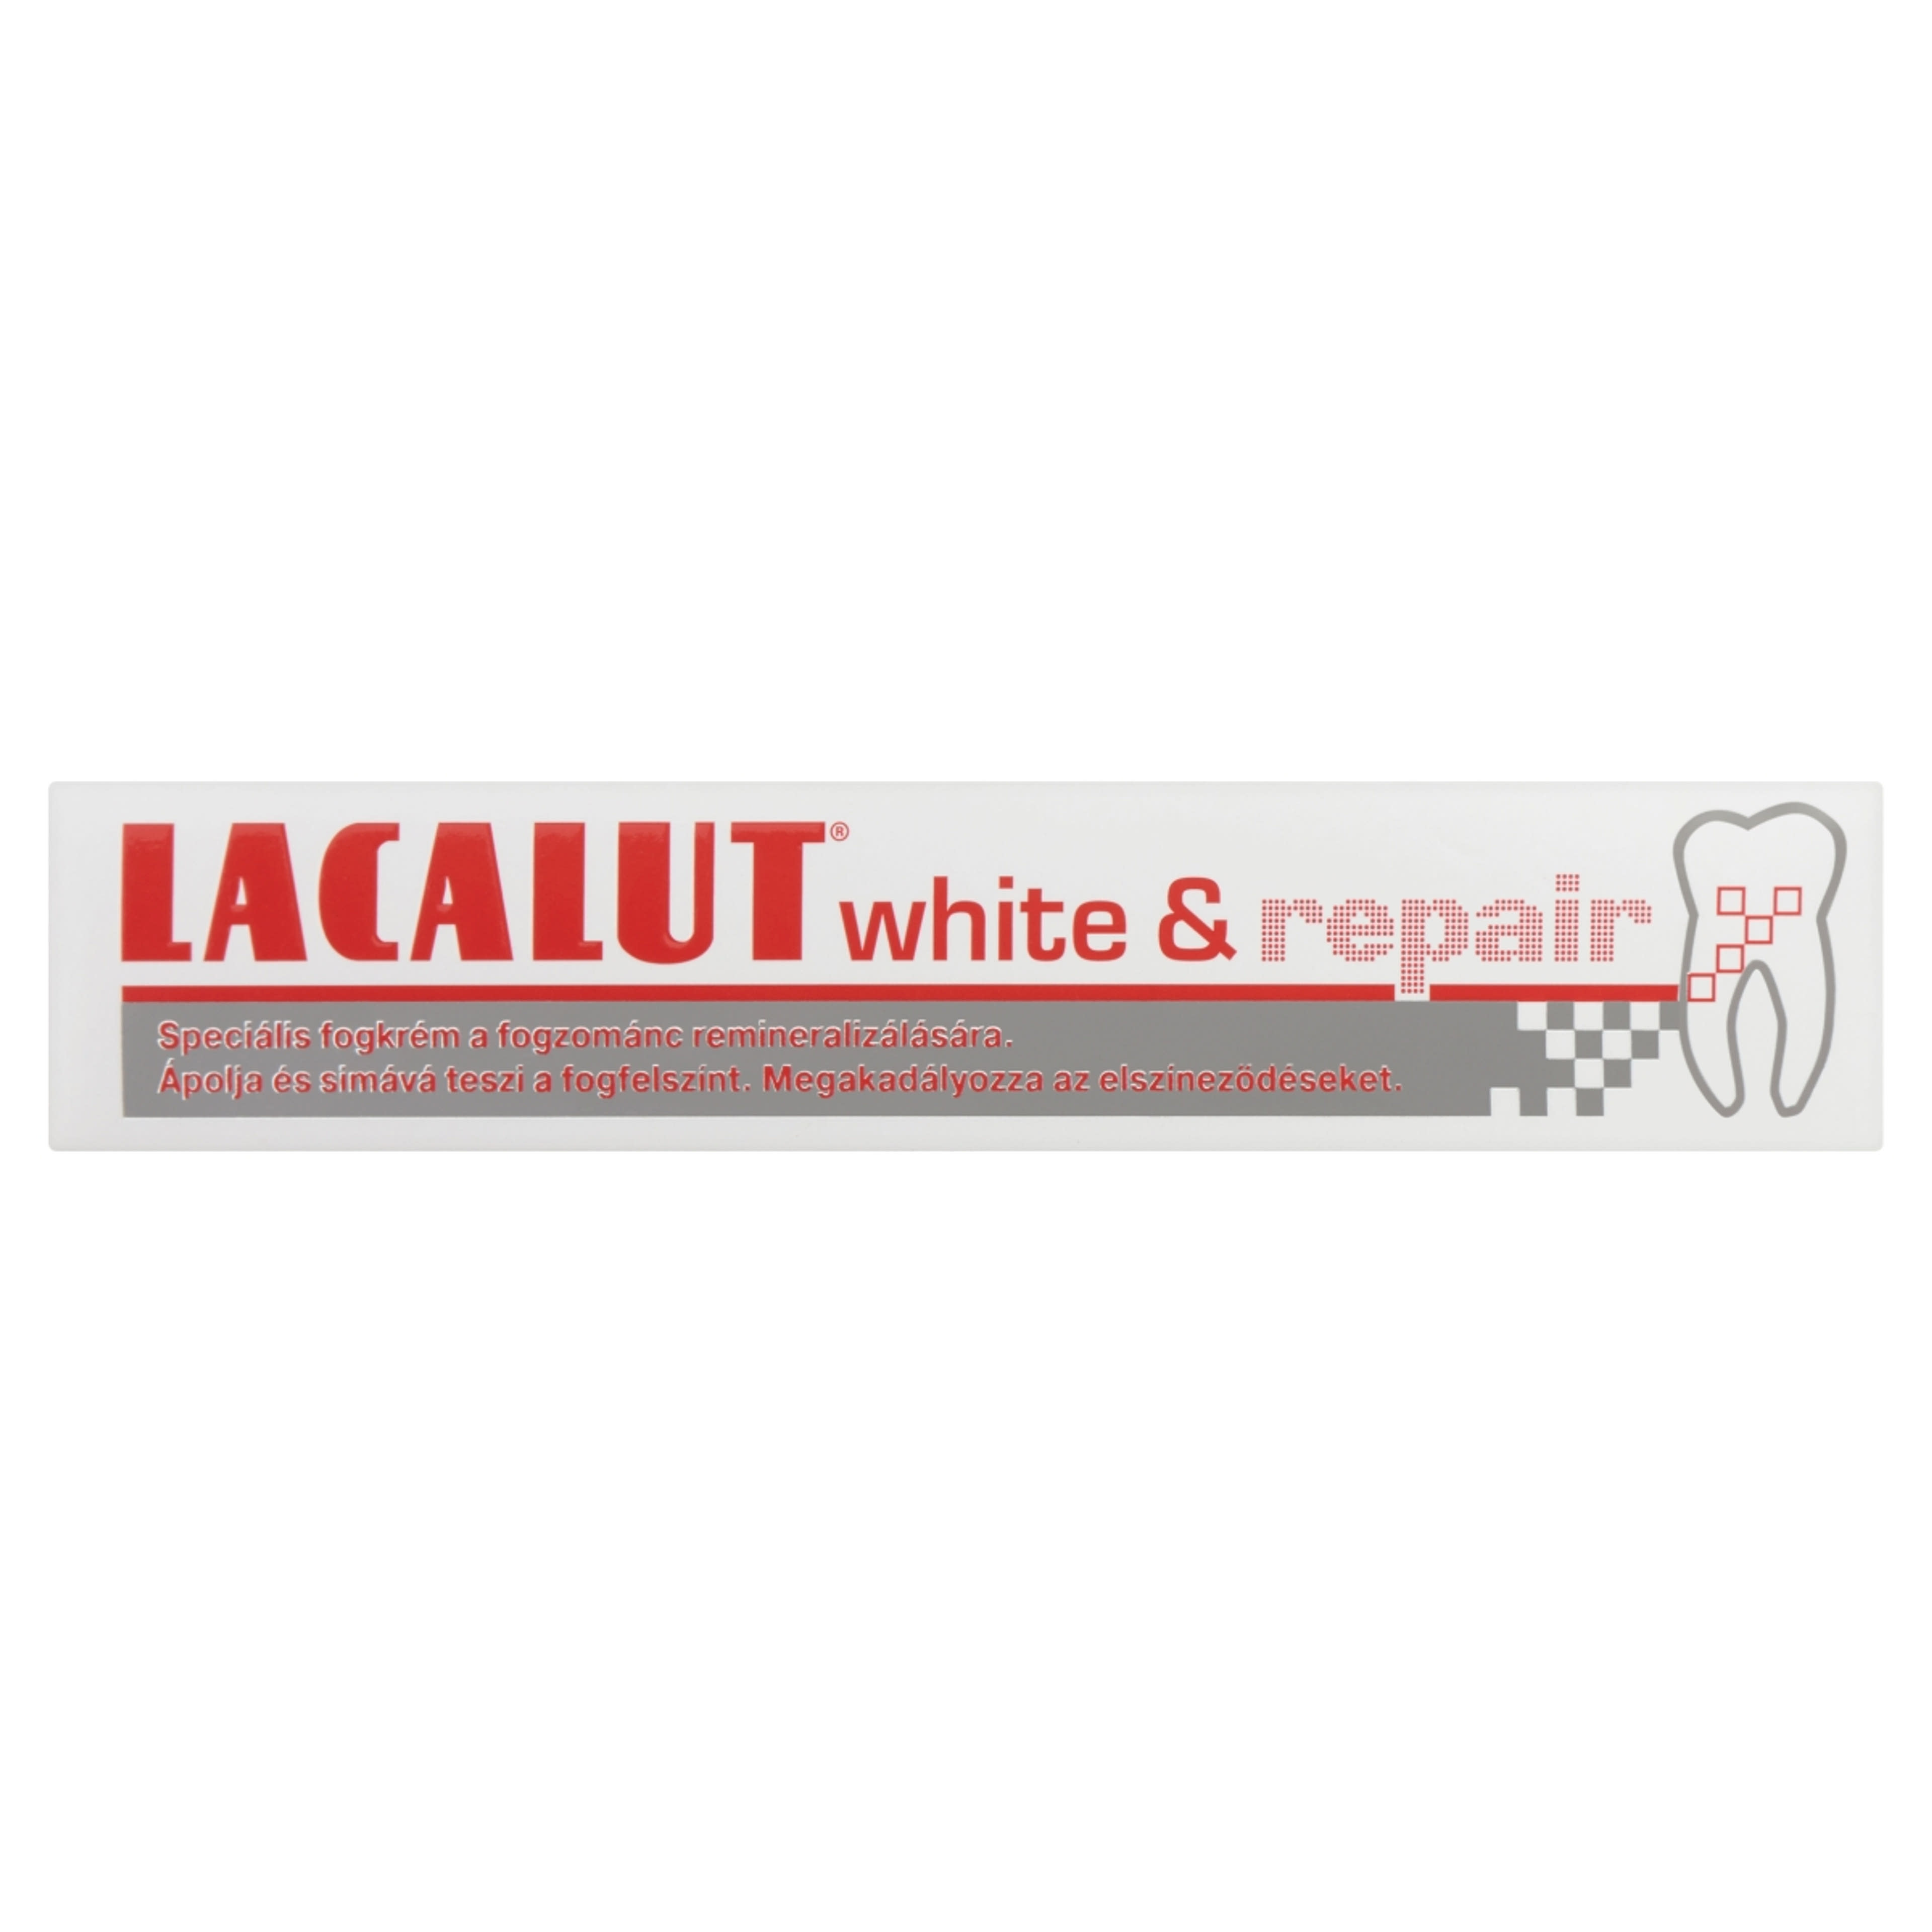 Lacalut White & Repair fogkrém - 75 ml